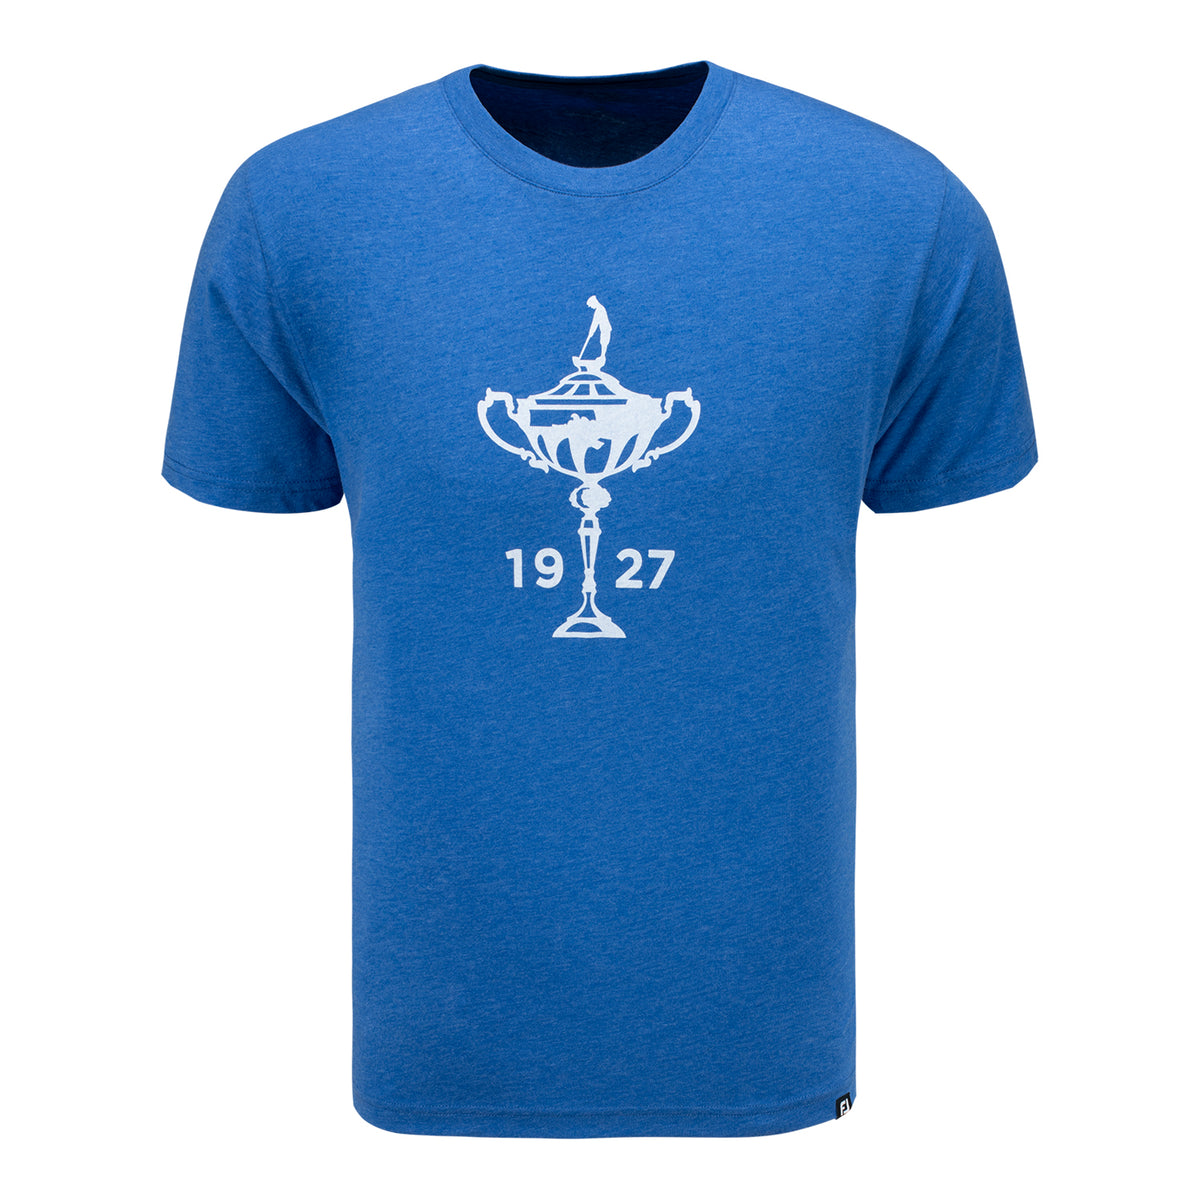 FootJoy Trophy T-Shirt - Blue - Front View